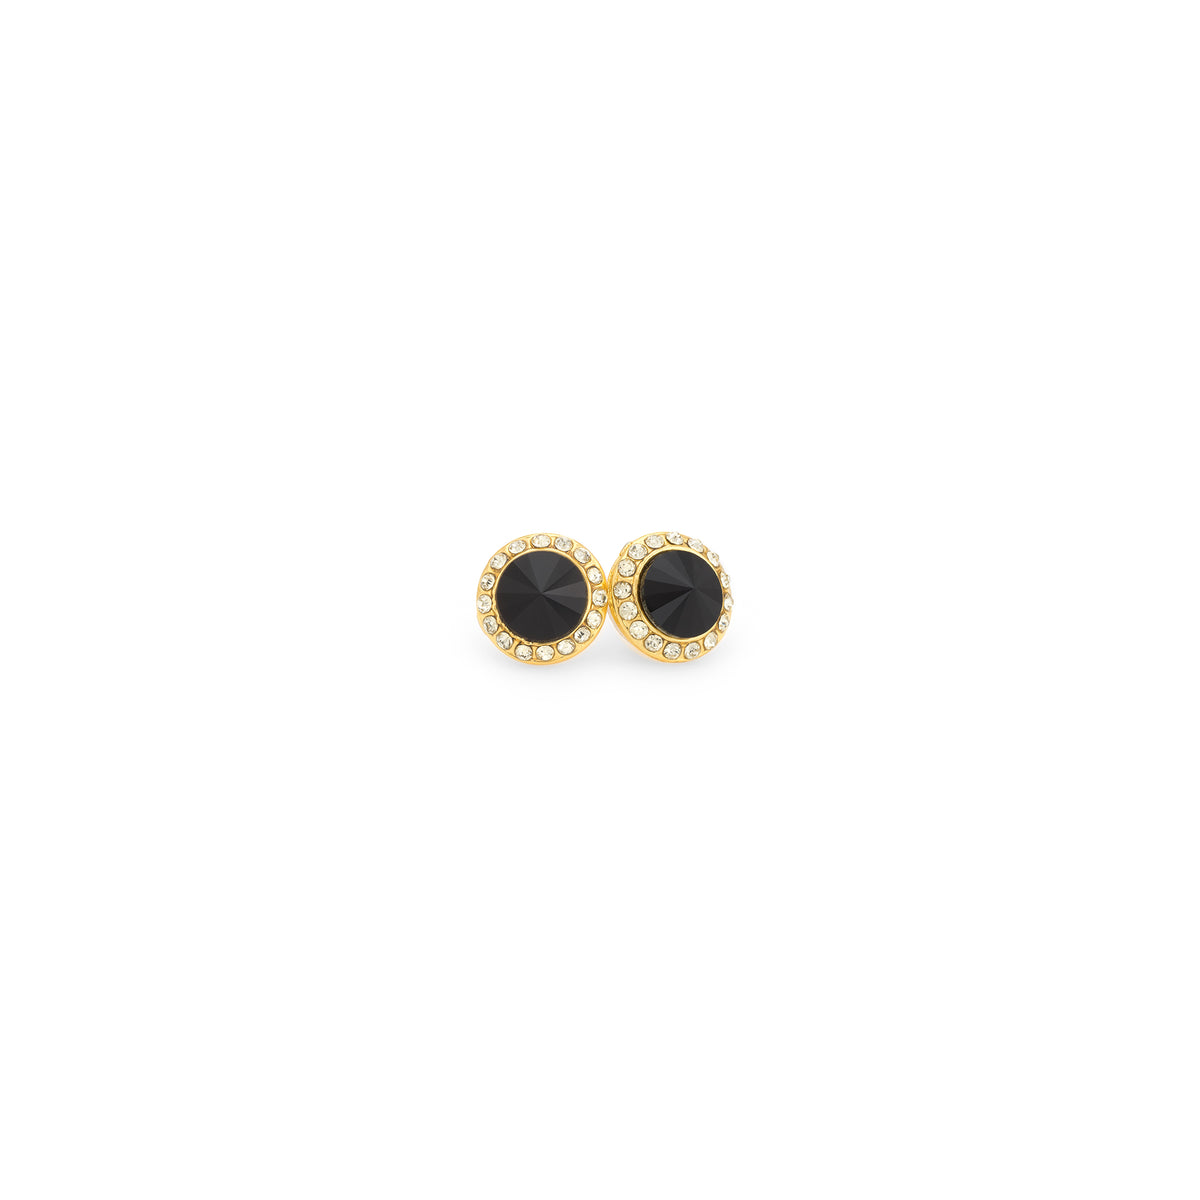 10mm Celestial Button Earrings - Black/Silver Gold Plate